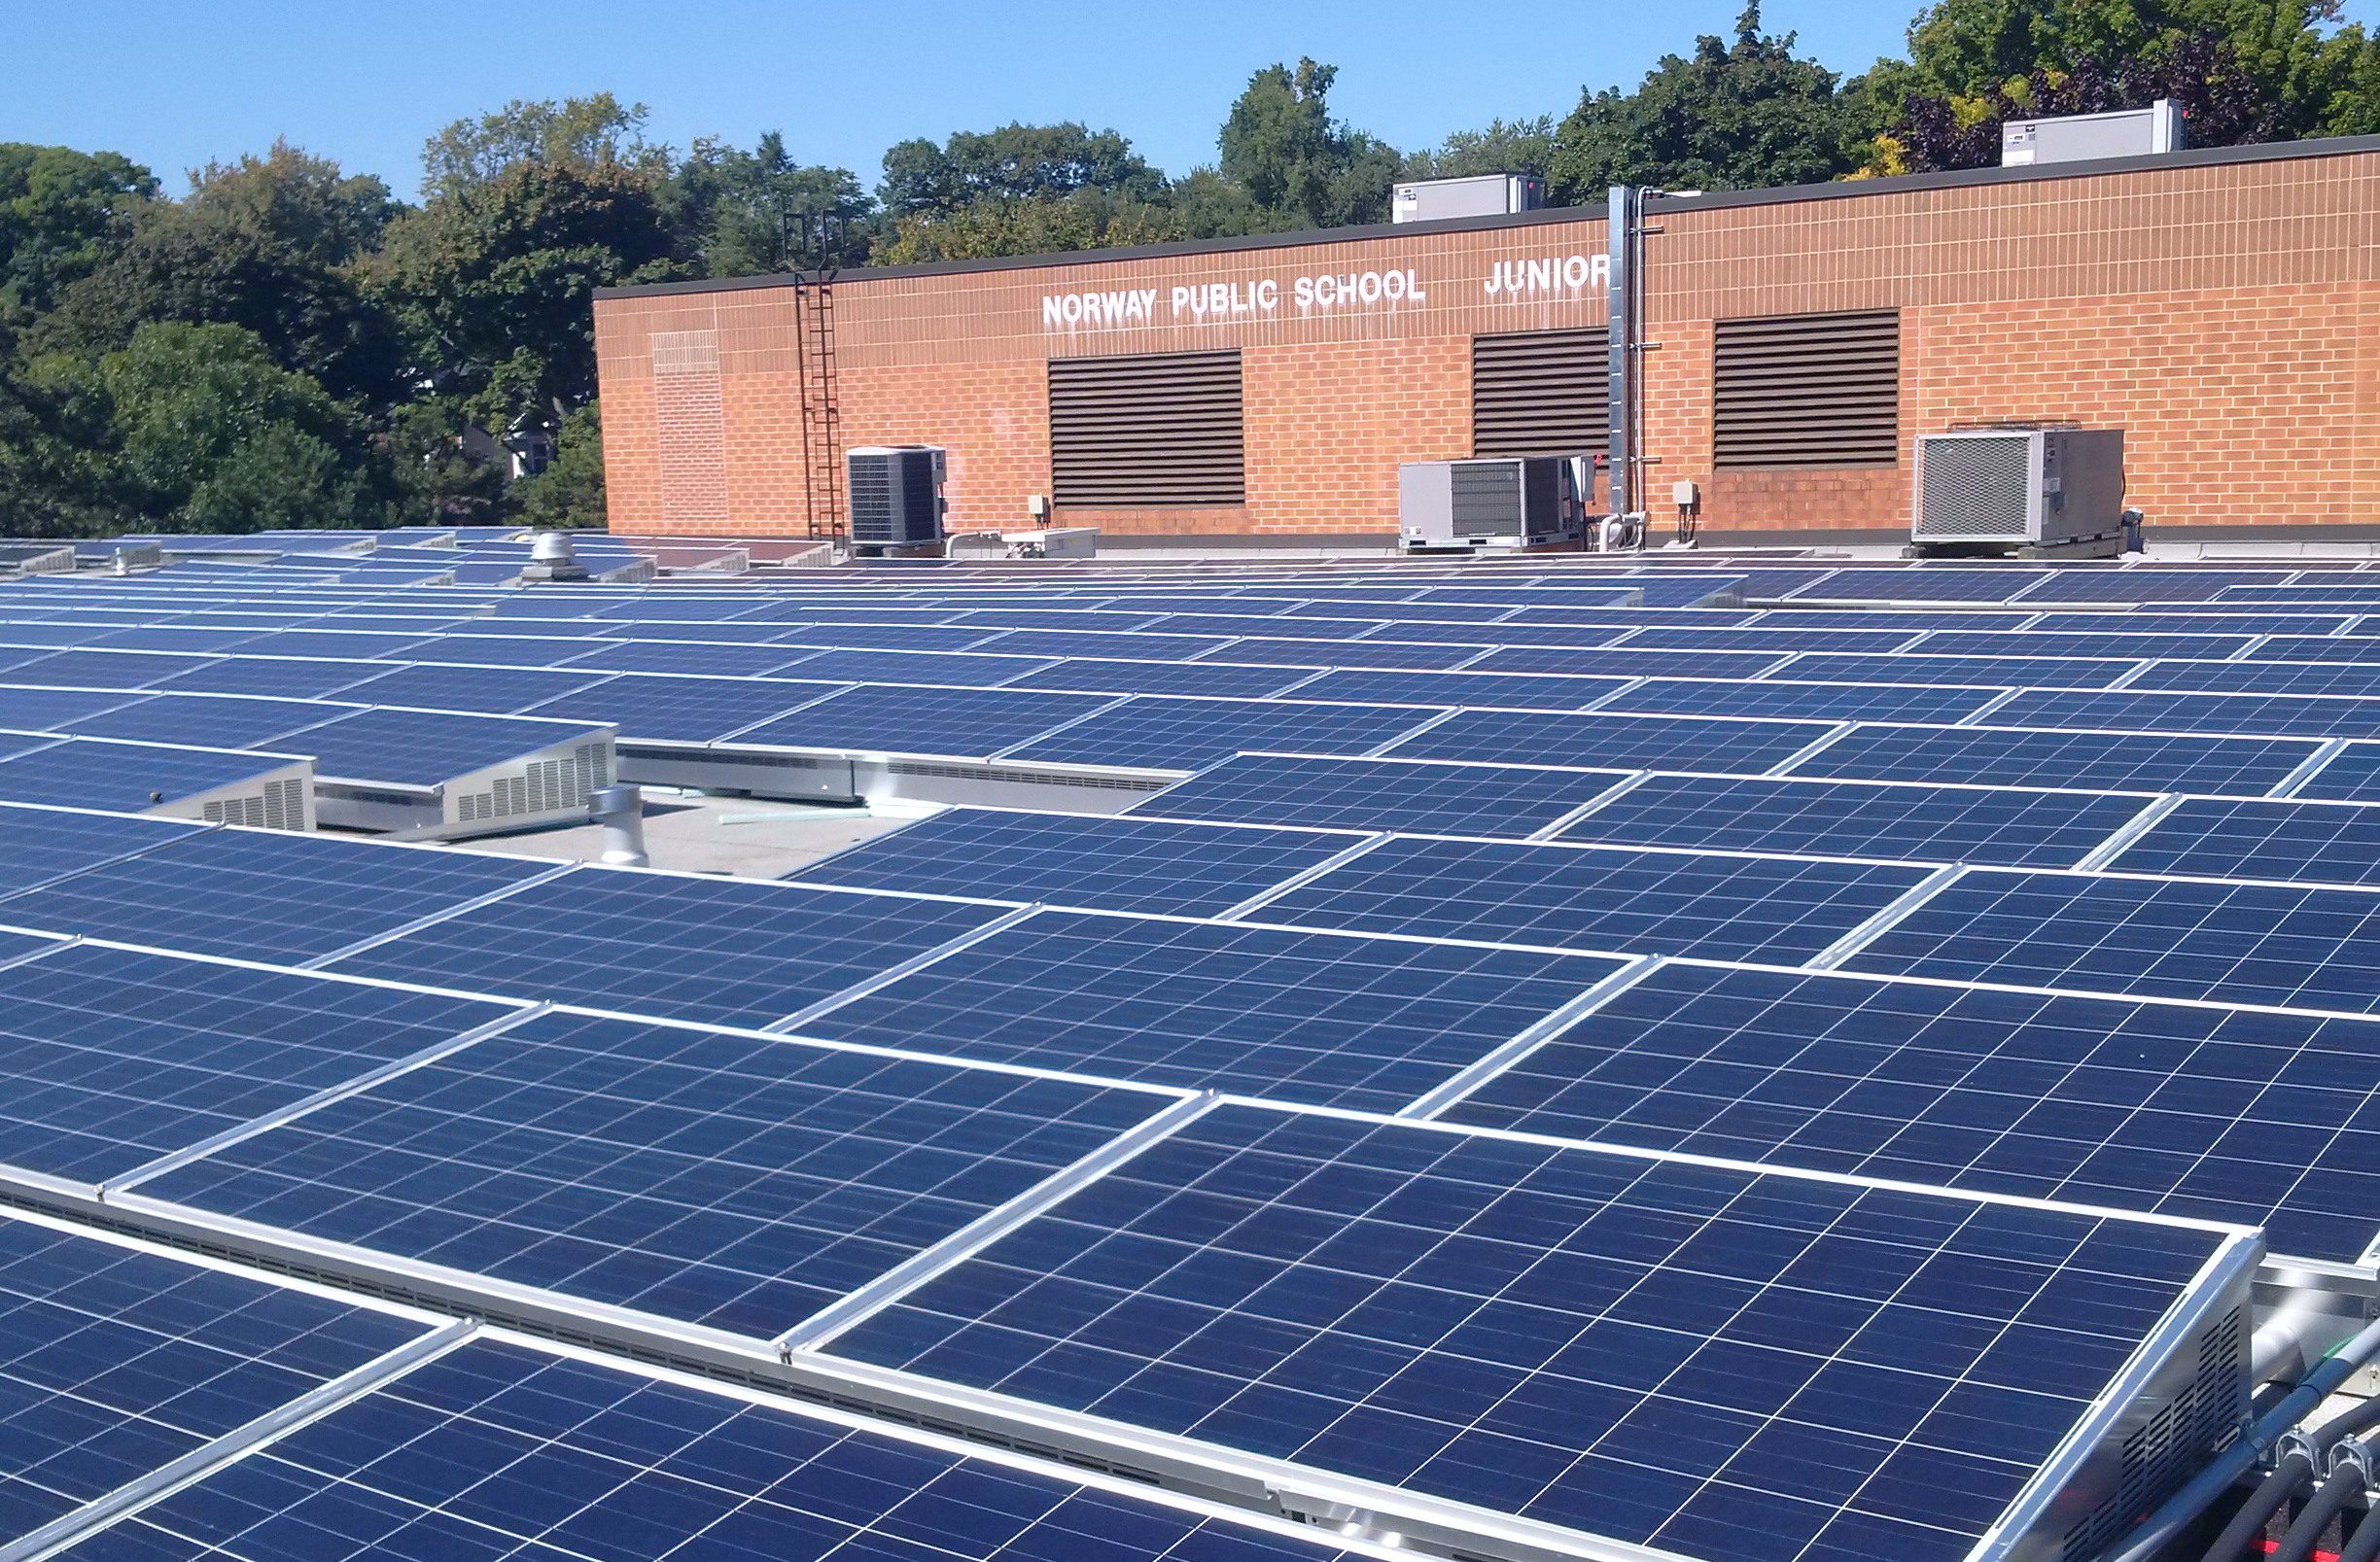 spend $30 million on solar panels for schools